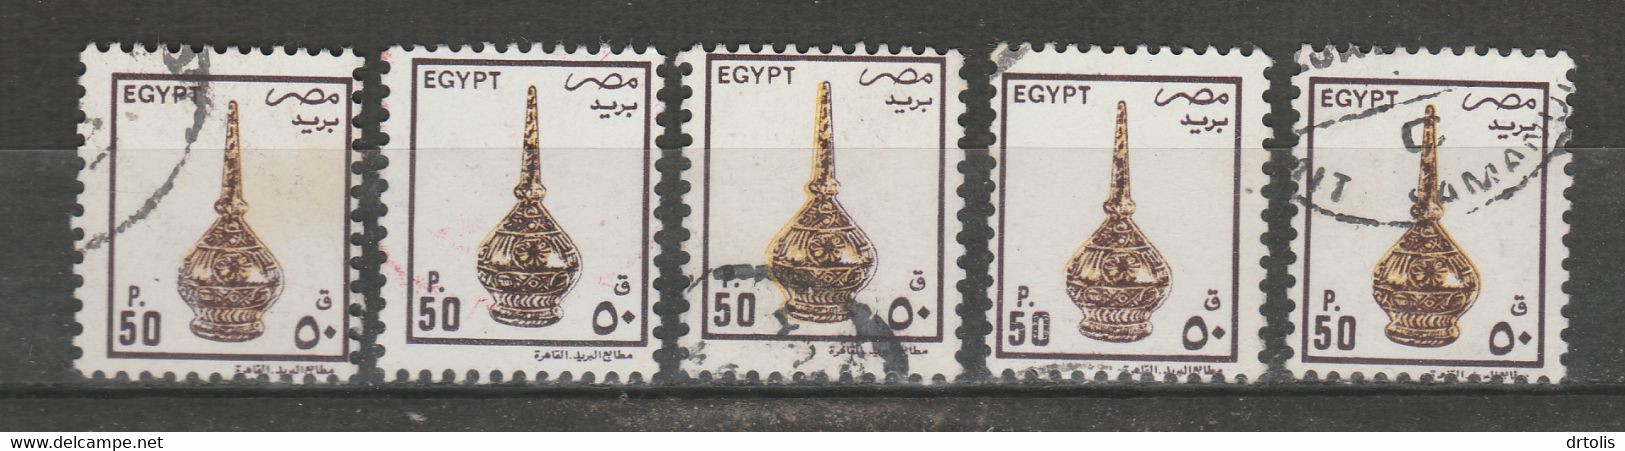 EGYPT / PERFORATION ERROR ERROR / VF USED - Gebraucht